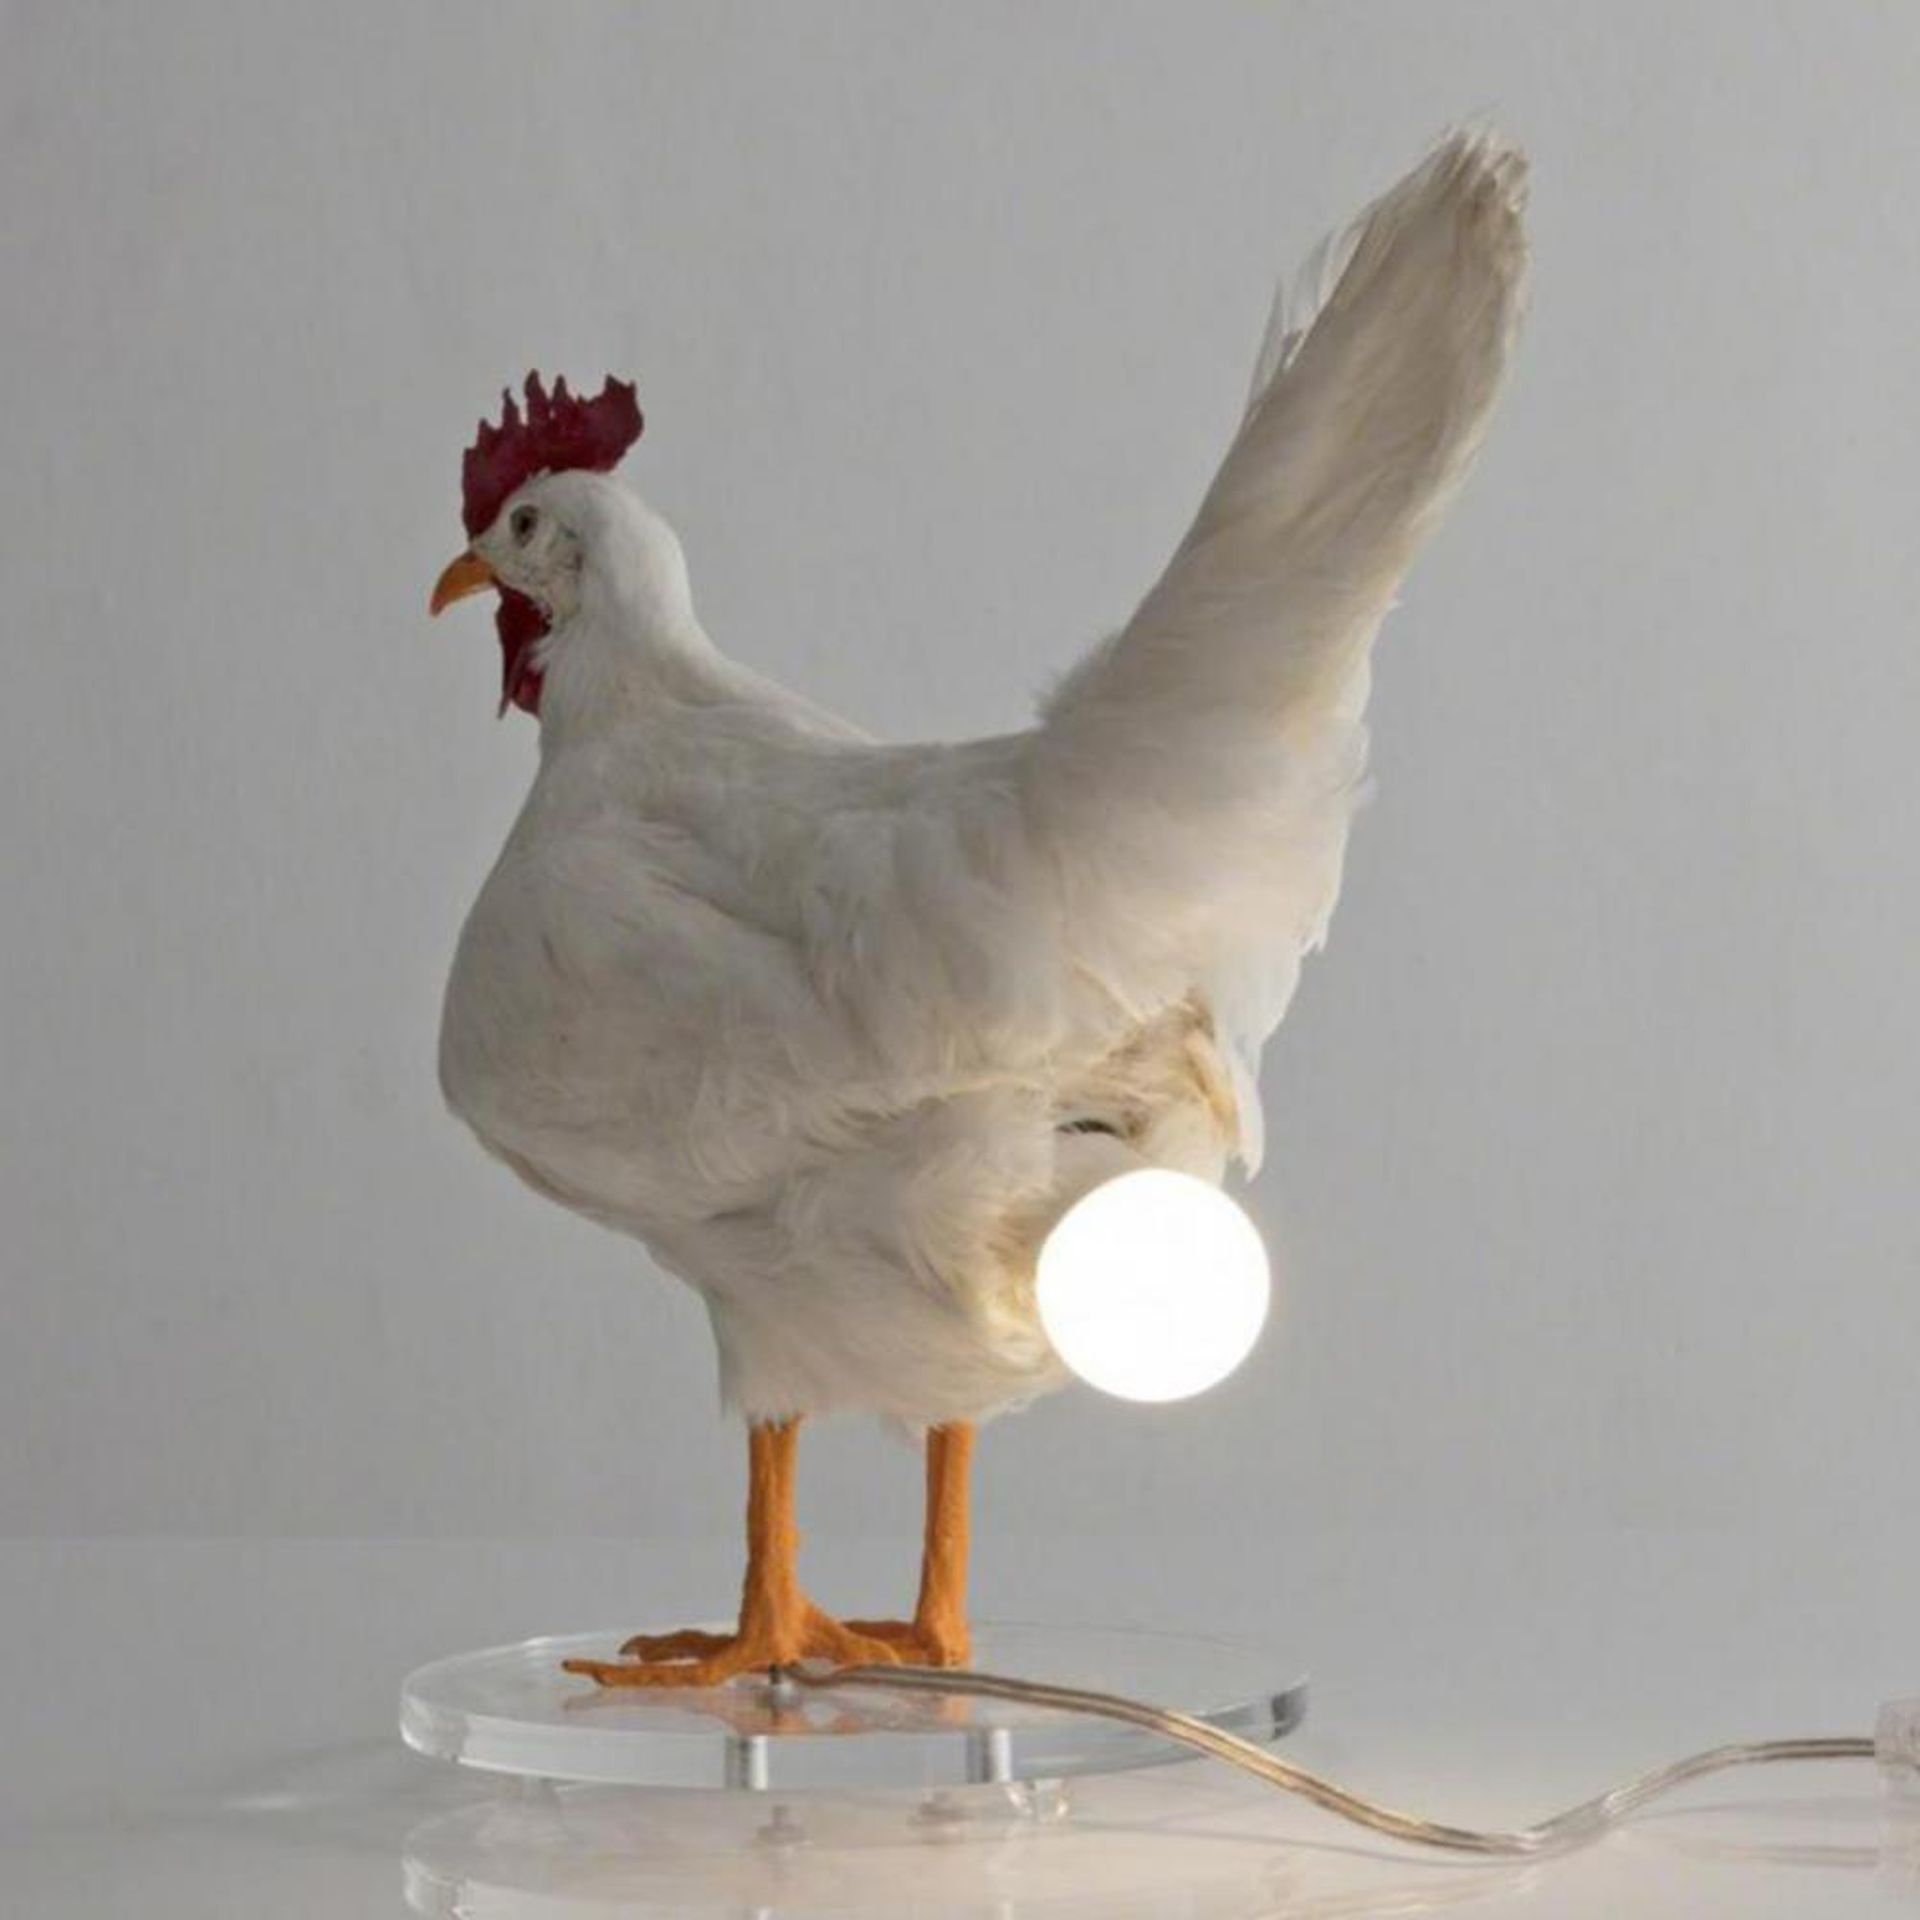 Lampka na biurko - kura, która świeci... jajkiem. Źródło: AliExpress